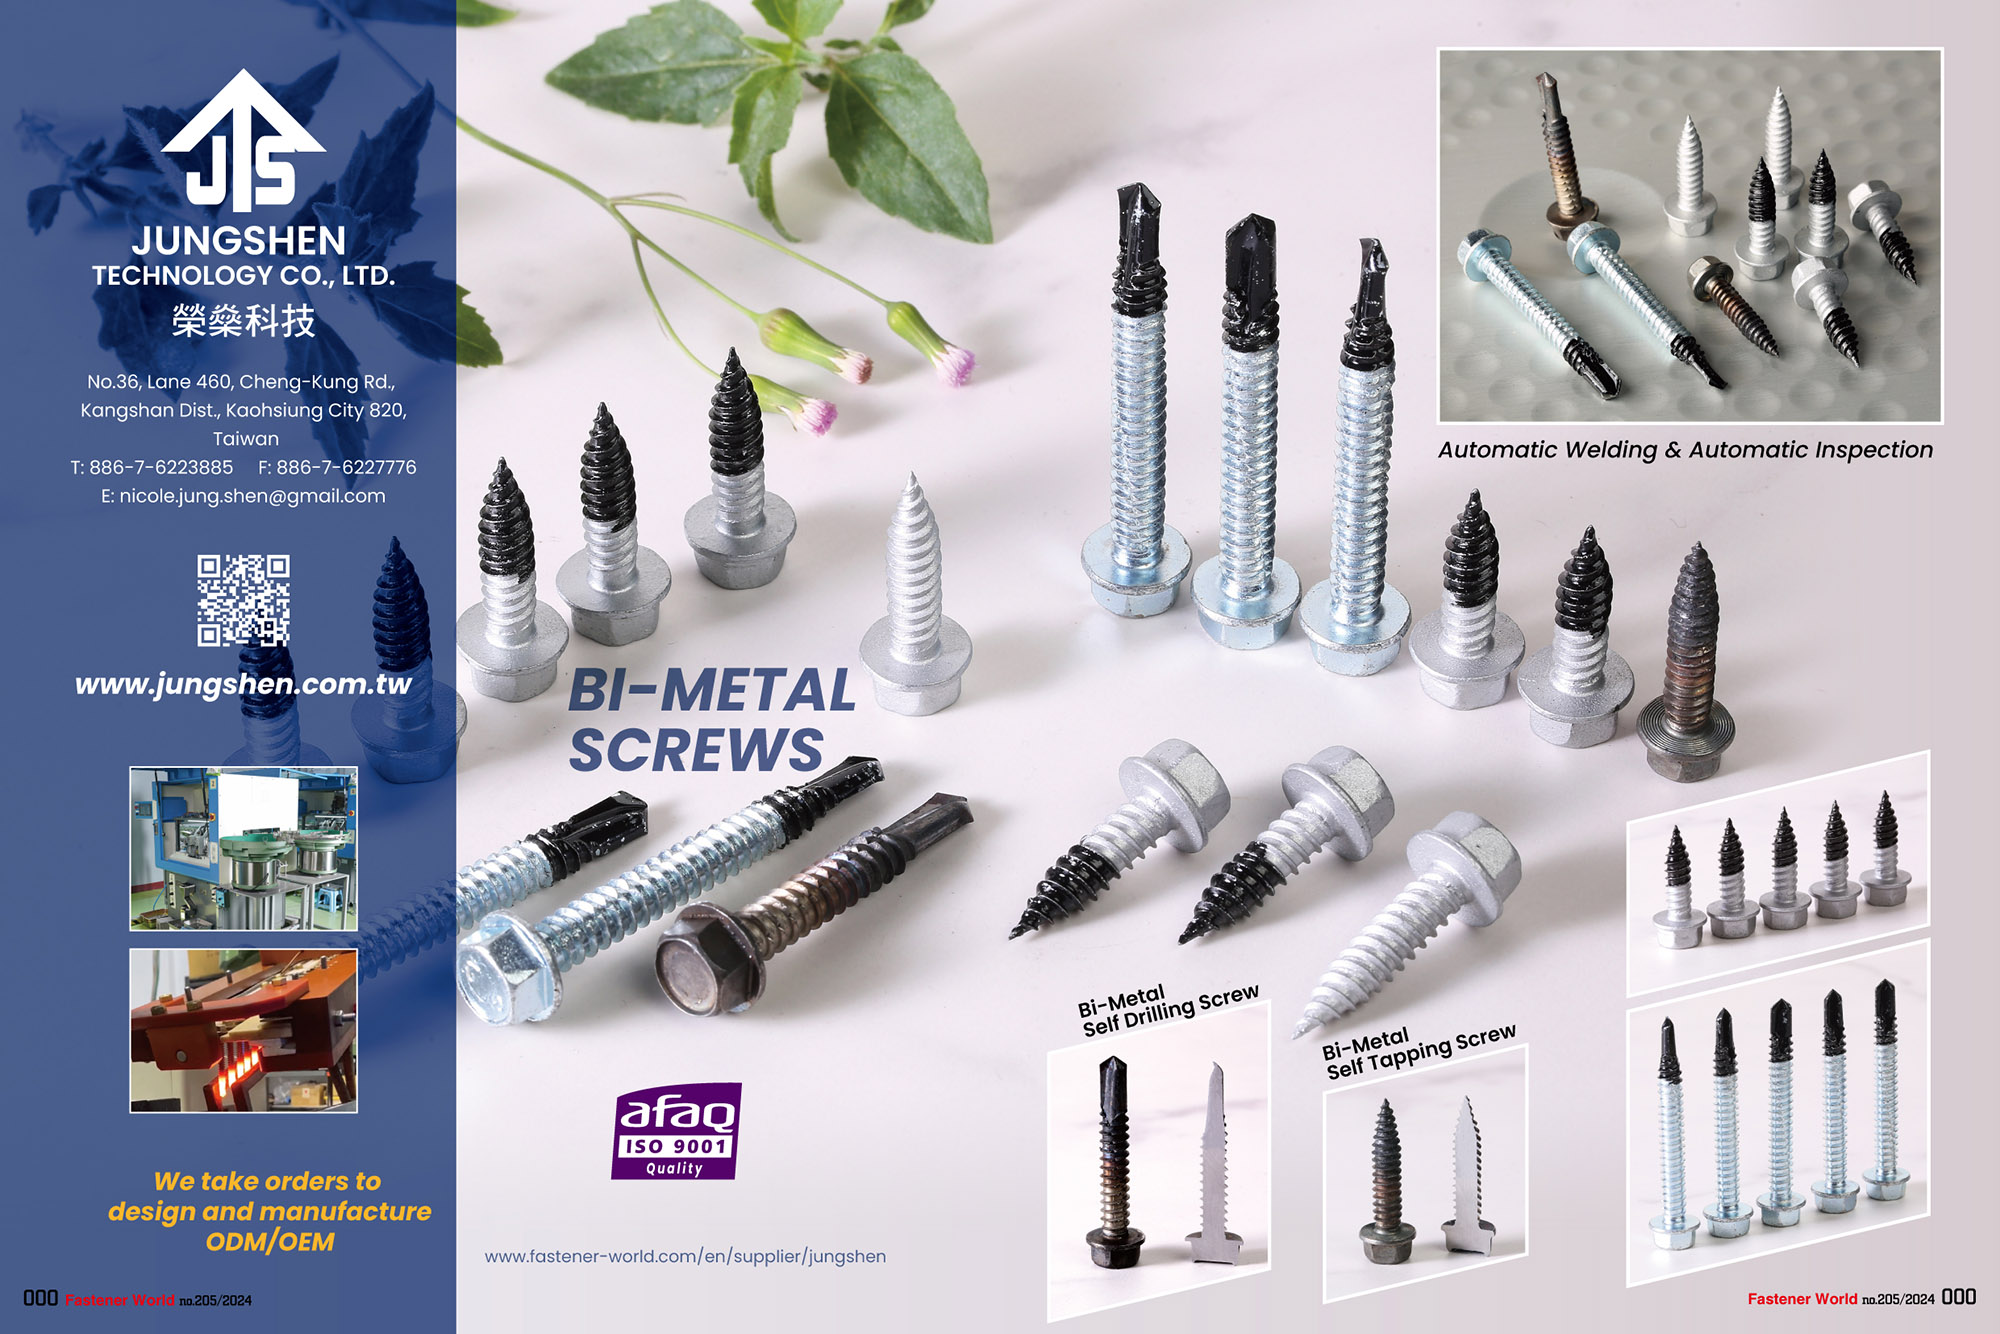 JUNGSHEN TECHNOLOGY CO., LTD. , Bi-Metal Screws, Bi-Metal Self Drilling Screws, Bi-Metal Tapping Screws, Automatic Welding & Automatic Inspection